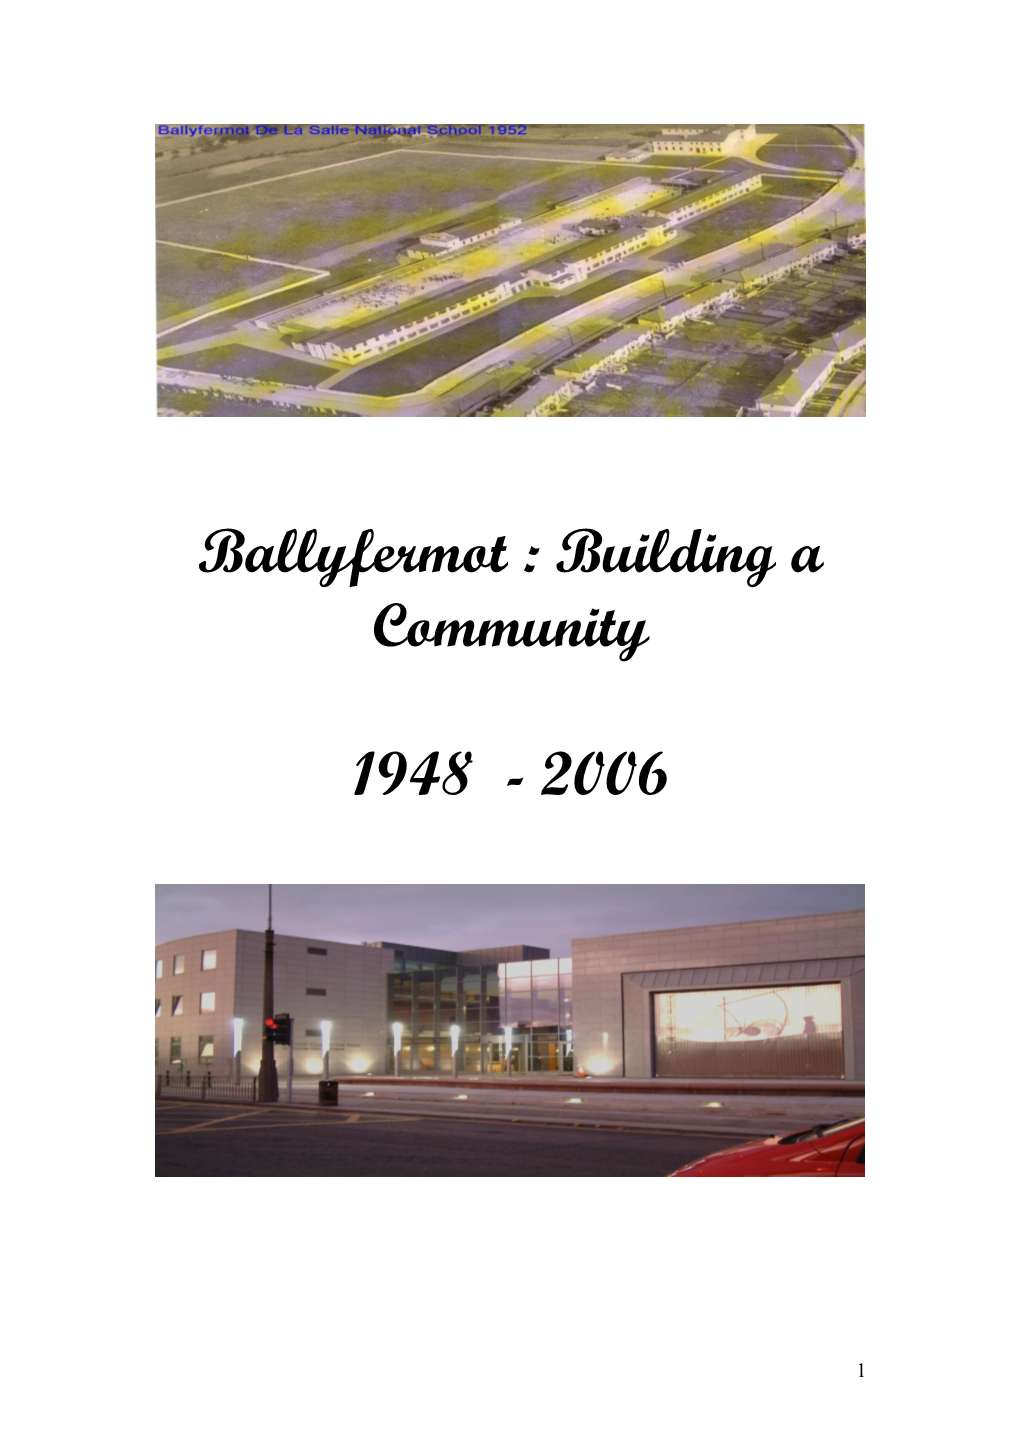 Ballyfermot 1950 to 2005 Local History